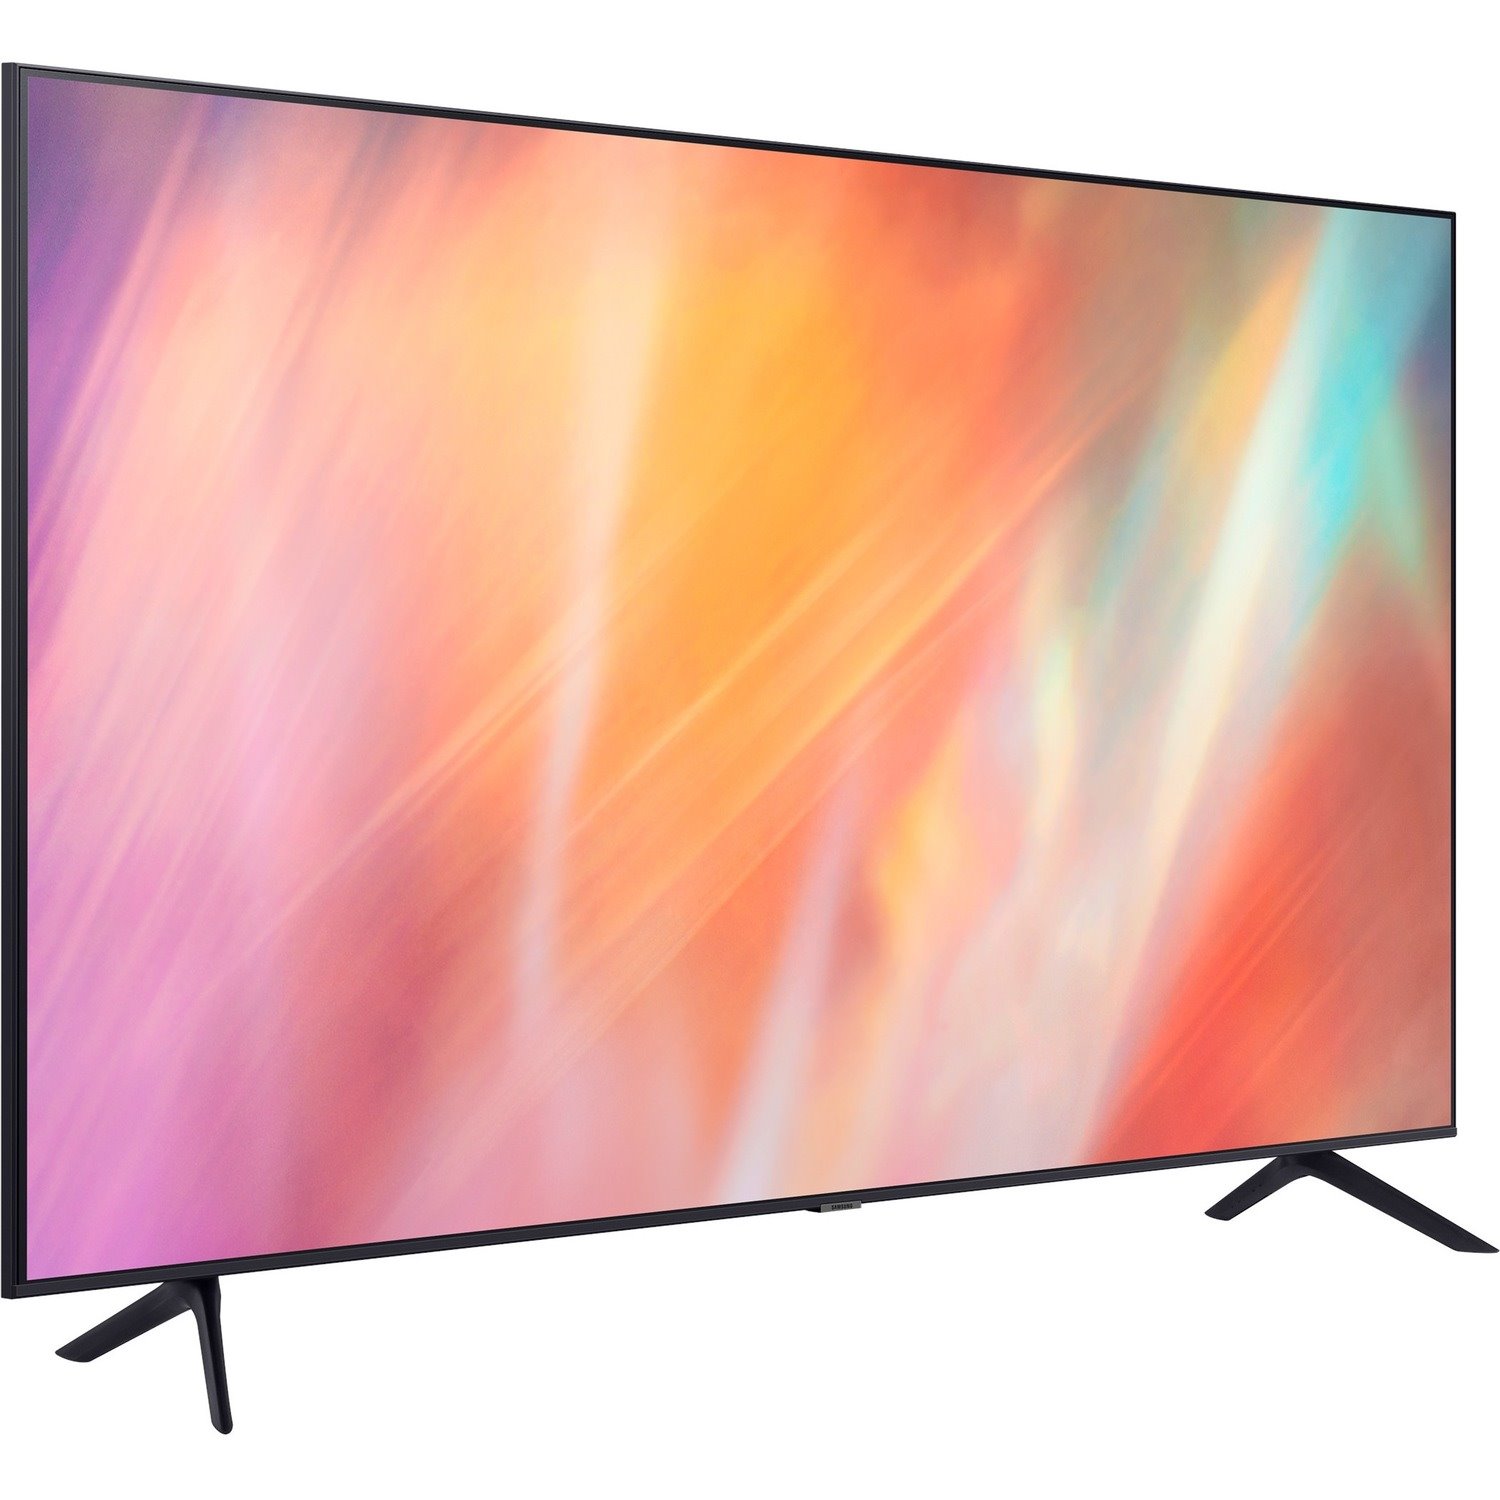 Samsung LH50BEAHLGW 127 cm Smart LED-LCD TV - 4K UHDTV - Titan Gray